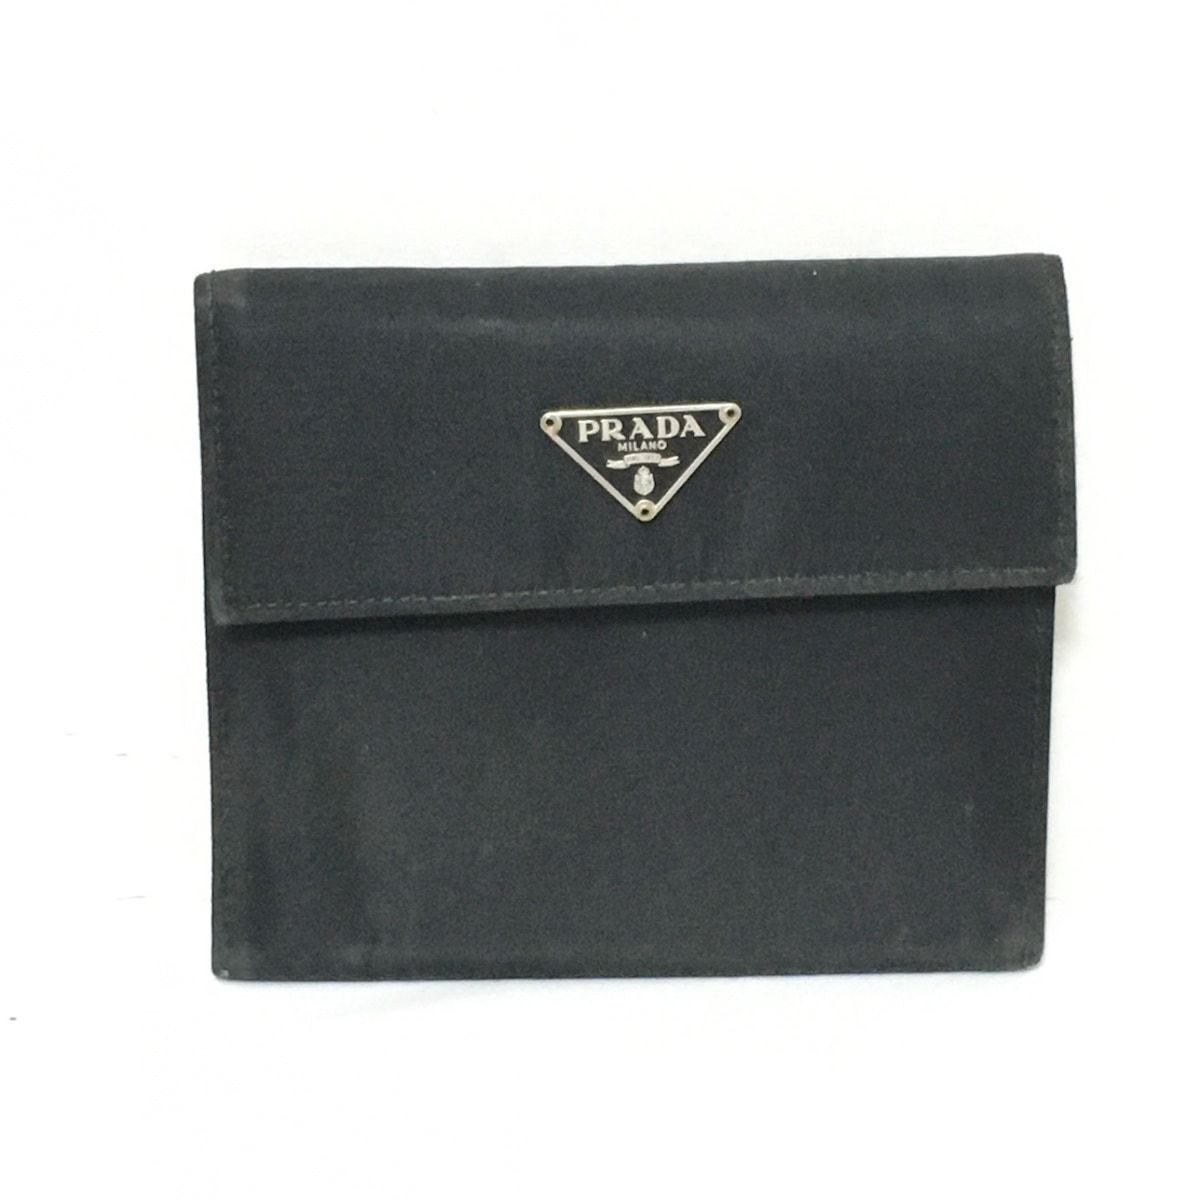 PRADA(プラダ) 3つ折り財布 - 黒 ナイロン - メルカリ